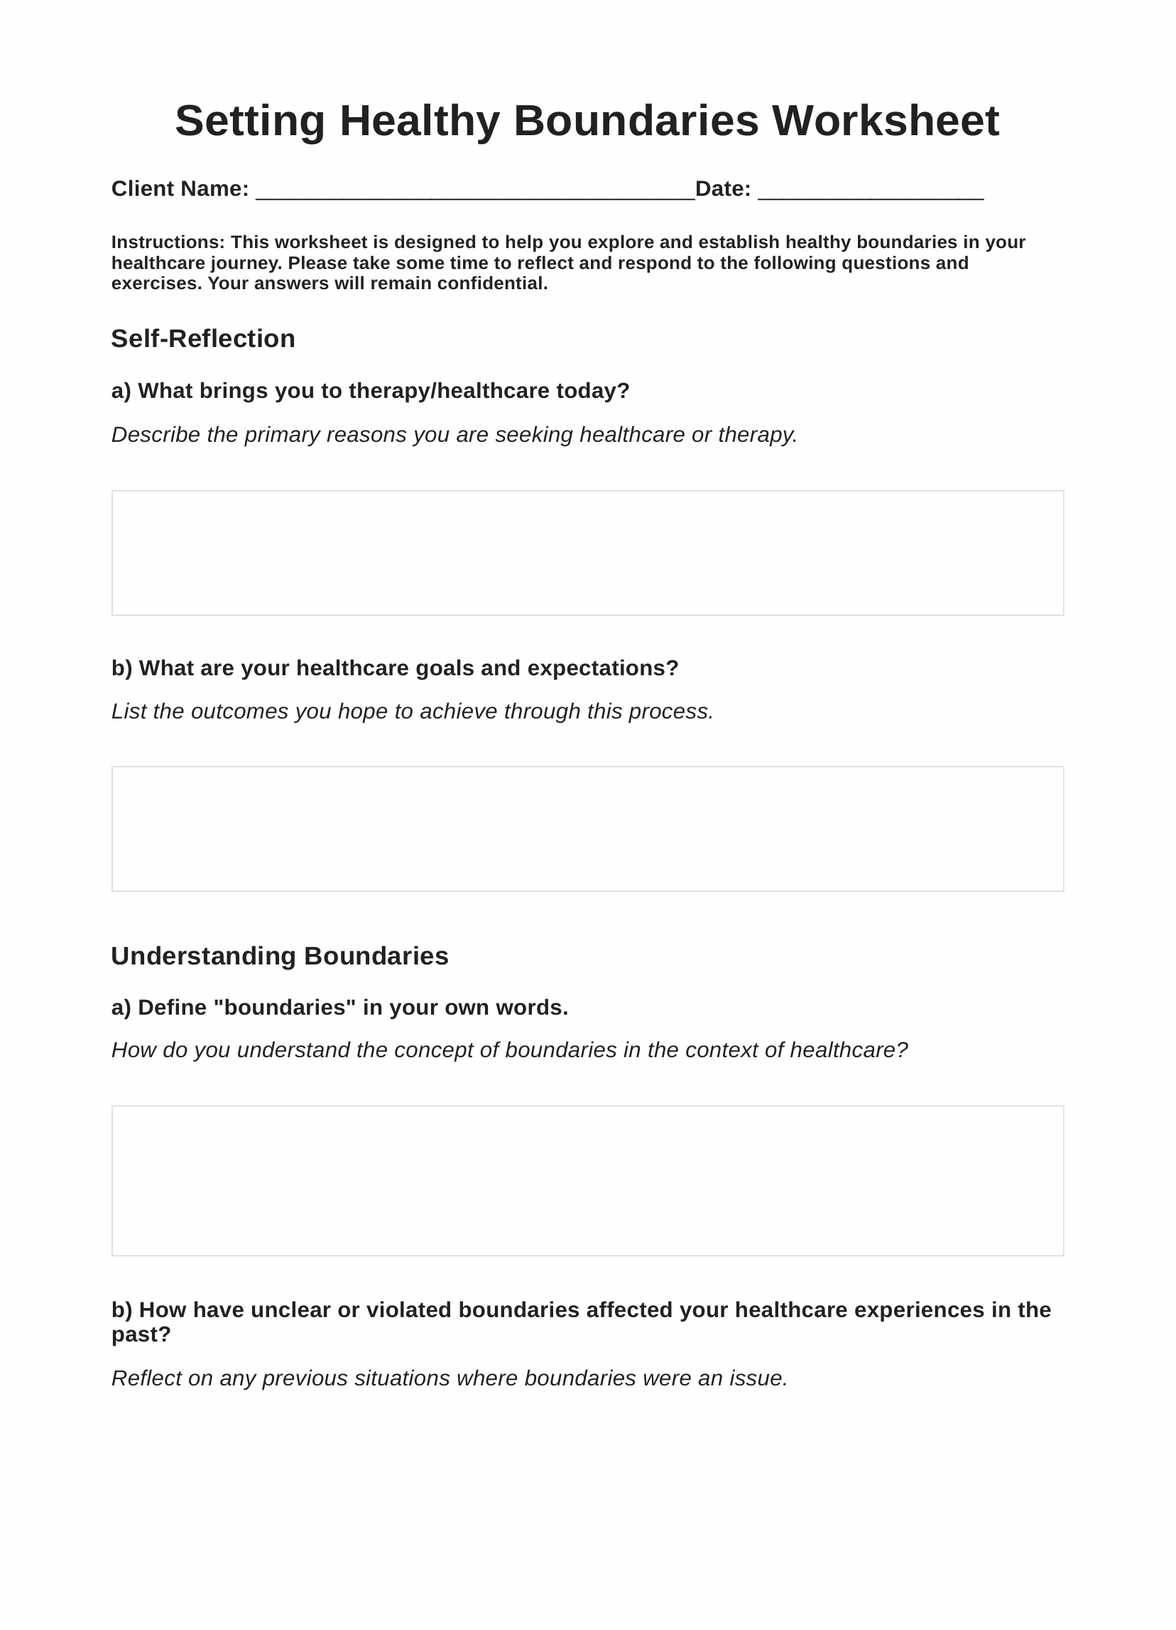 Setting Healthy Boundaries Worksheets PDF Example